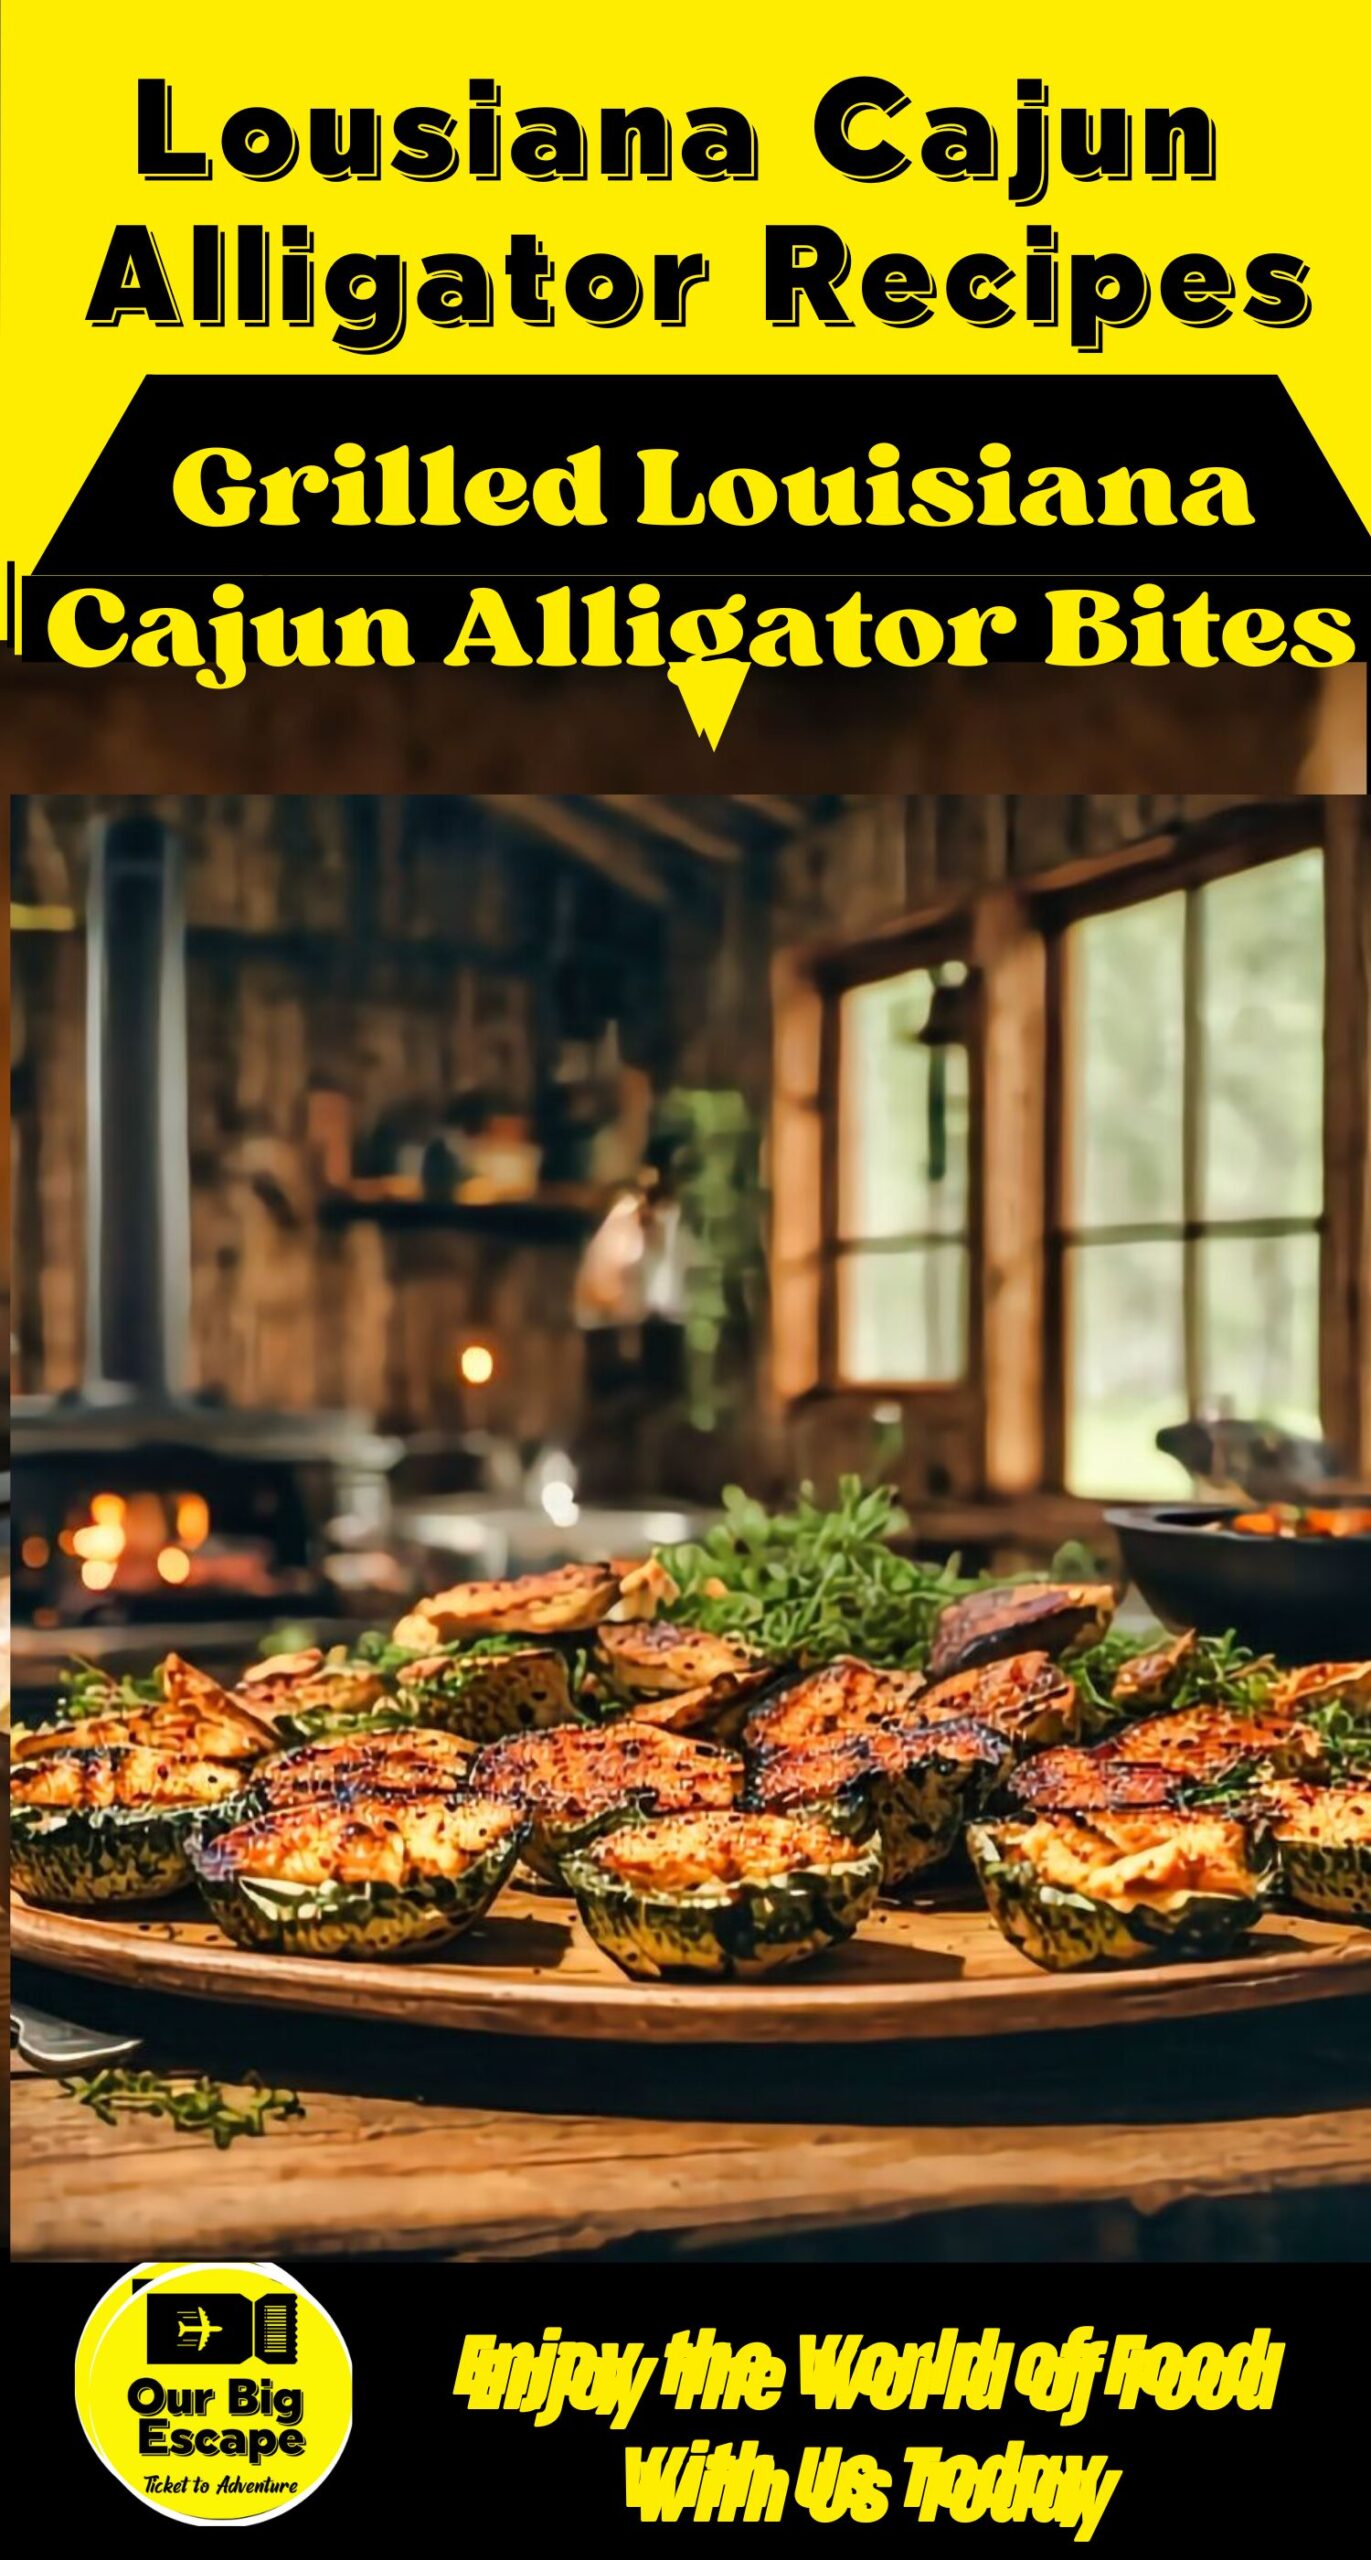 Grilled Louisiana Cajun Alligator Bites Recipe